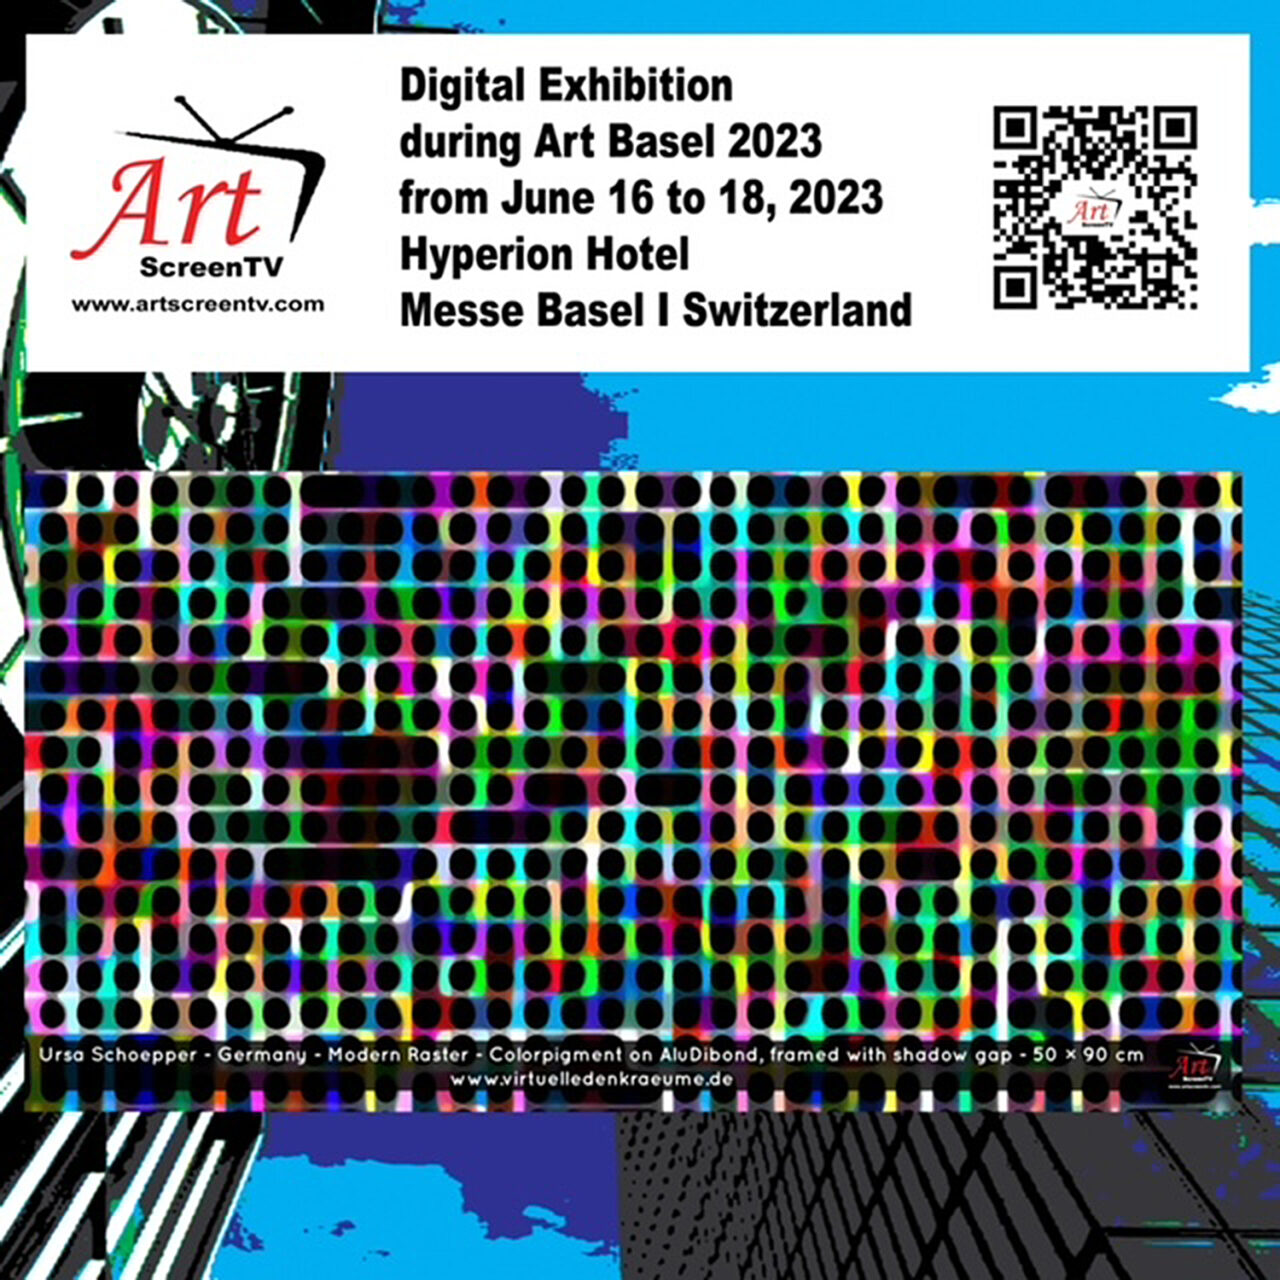 Digital Exhibition during Art Basel Hotel Hyperion